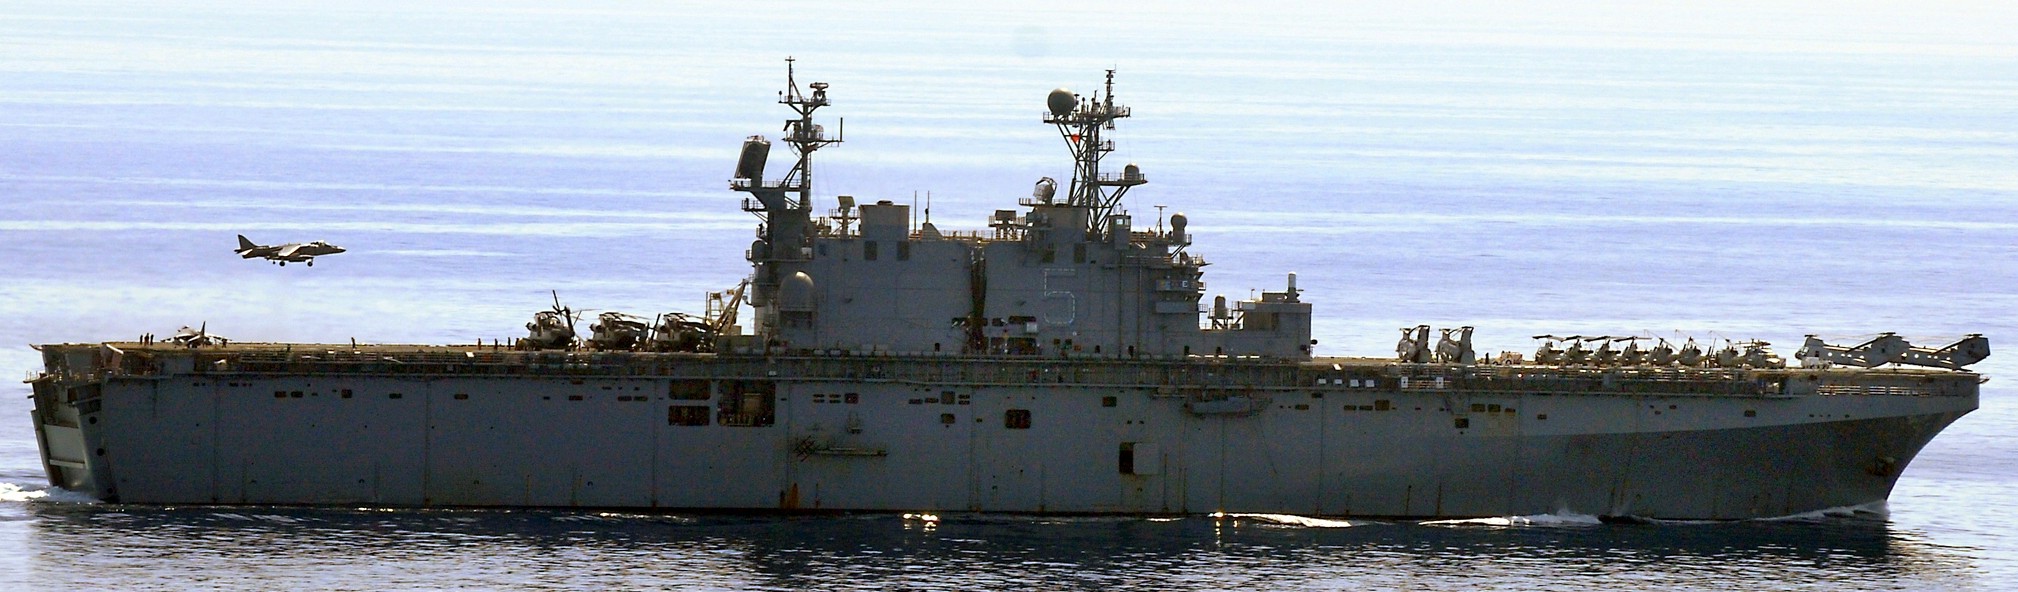 lha-5 uss peleliu tarawa class amphibious assault ship landing helicopter us navy hmm-165(rein) marines 50